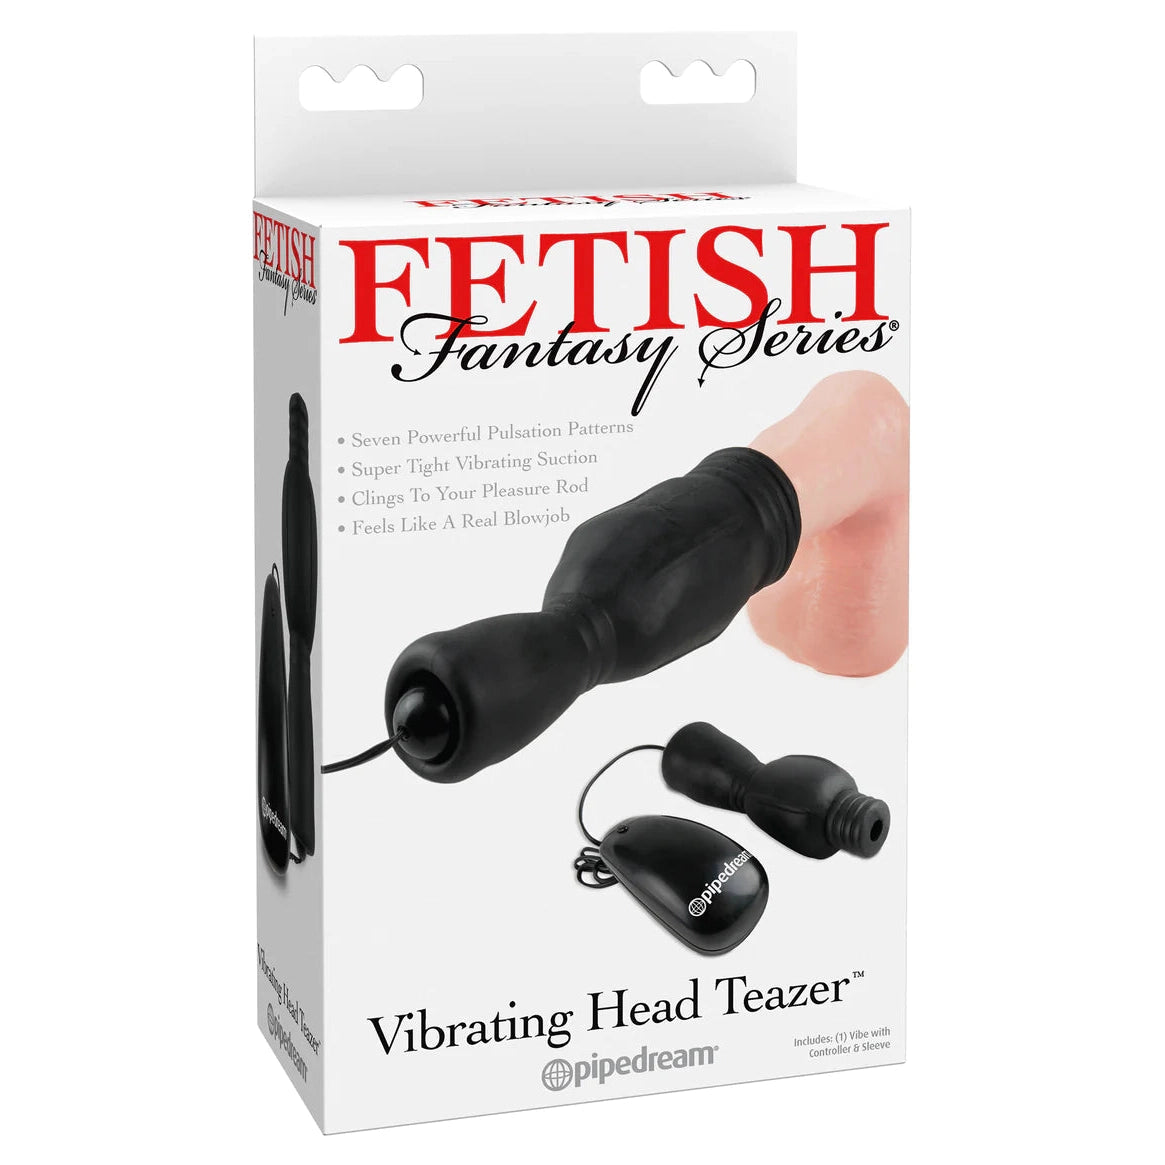 Fetish Fantasy Vibrating Penis Head Teazer